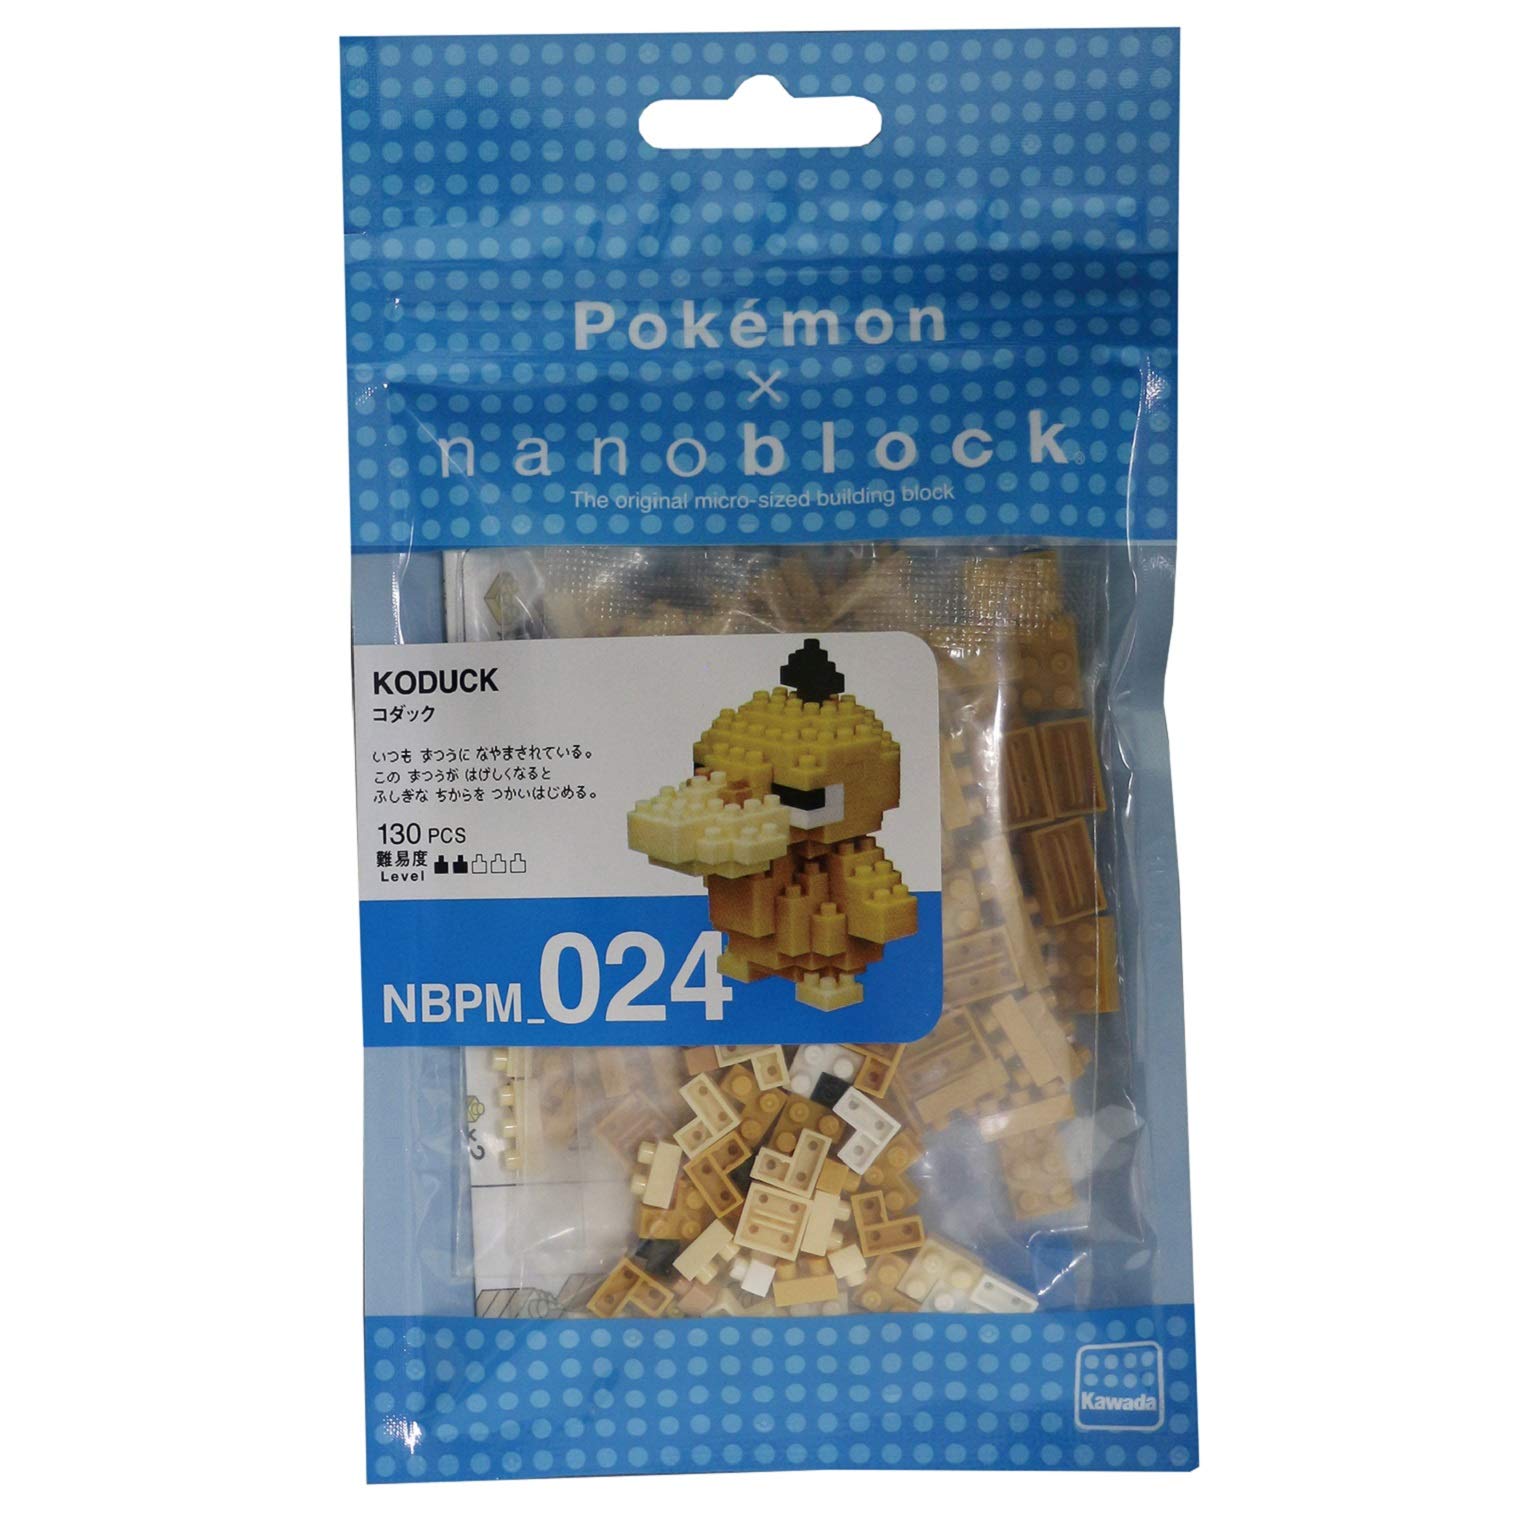 nanoblock - Pokemon - Psyduck, Pokemon Series Building Kit